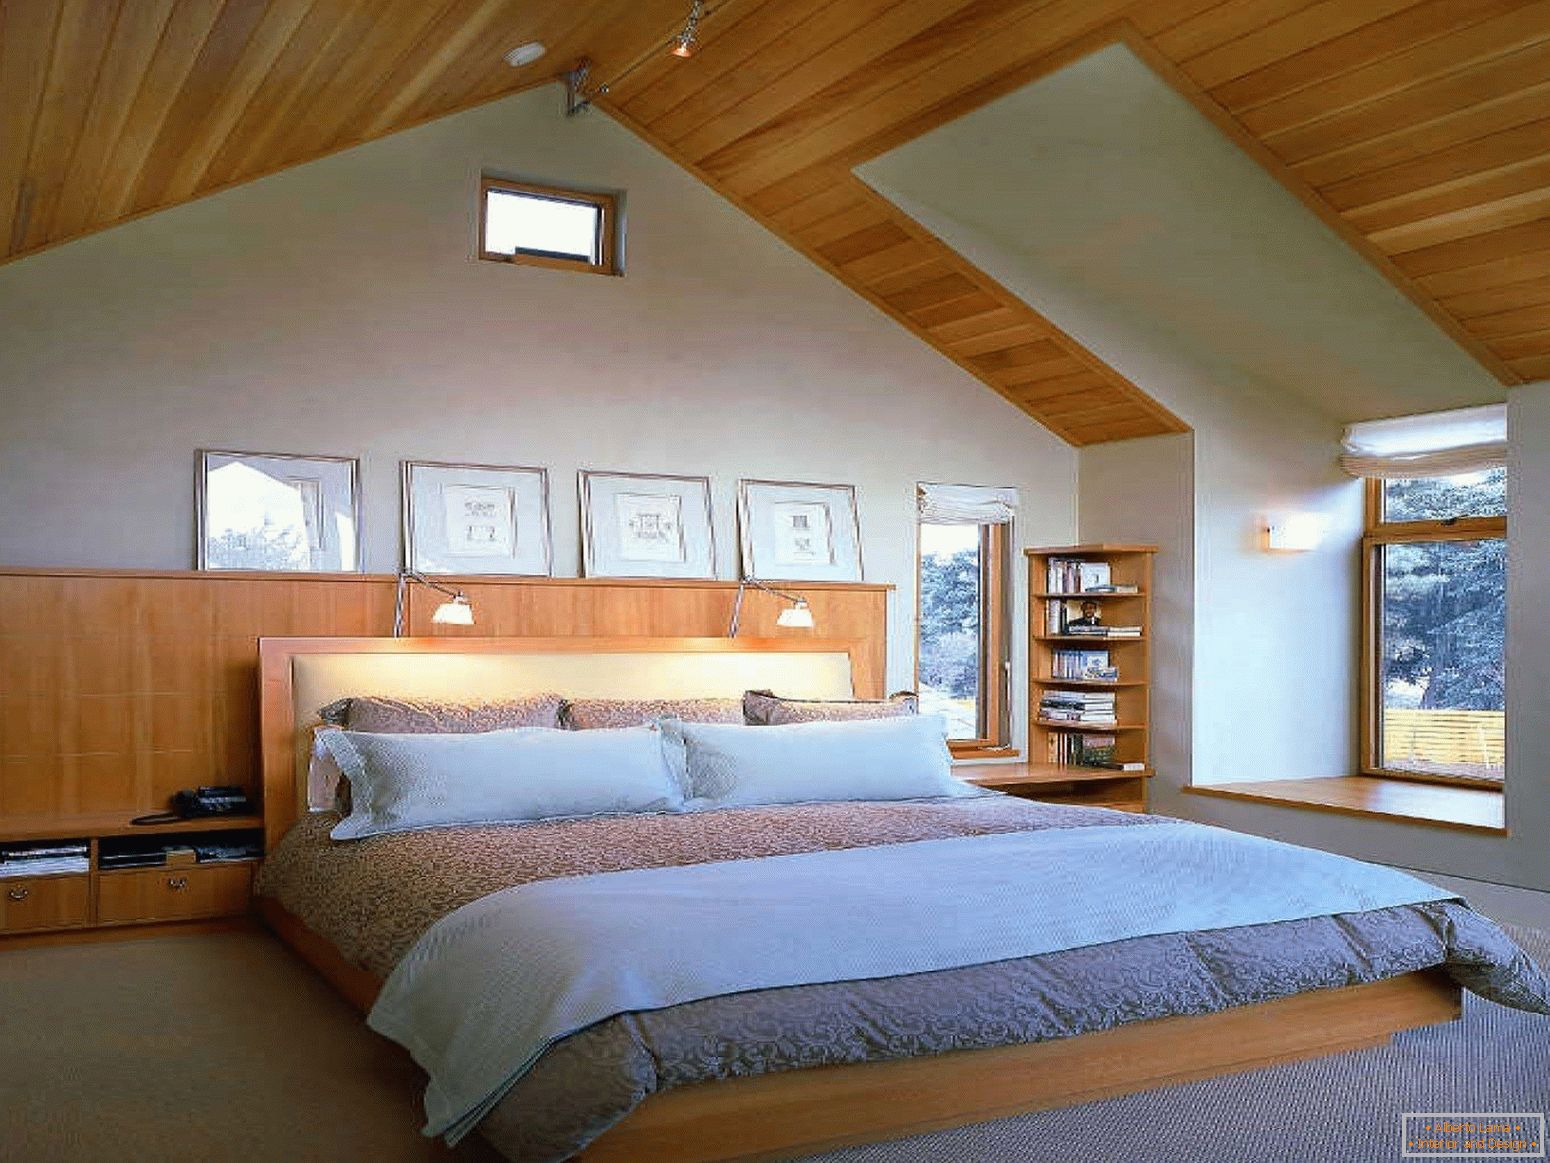 Bedroom design in the attic с высокими стенами